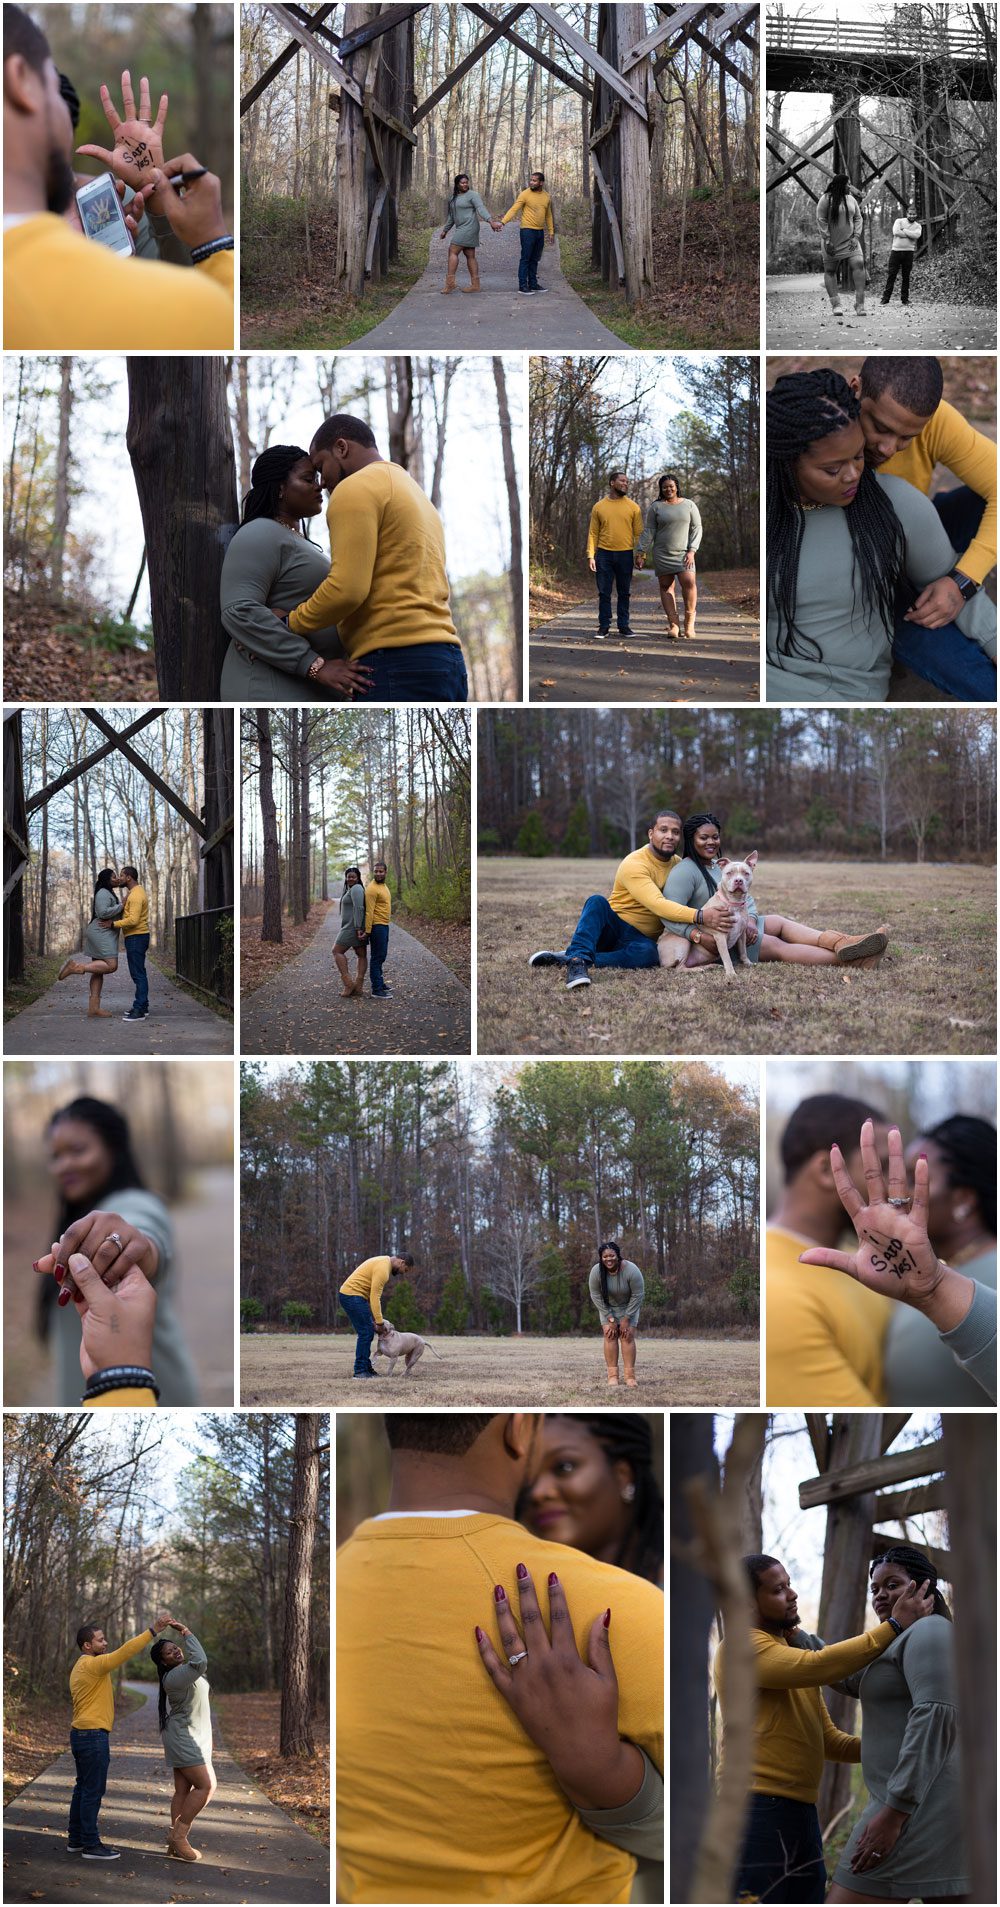 Jina Lee Photography | Atlanta Engagement Photographer